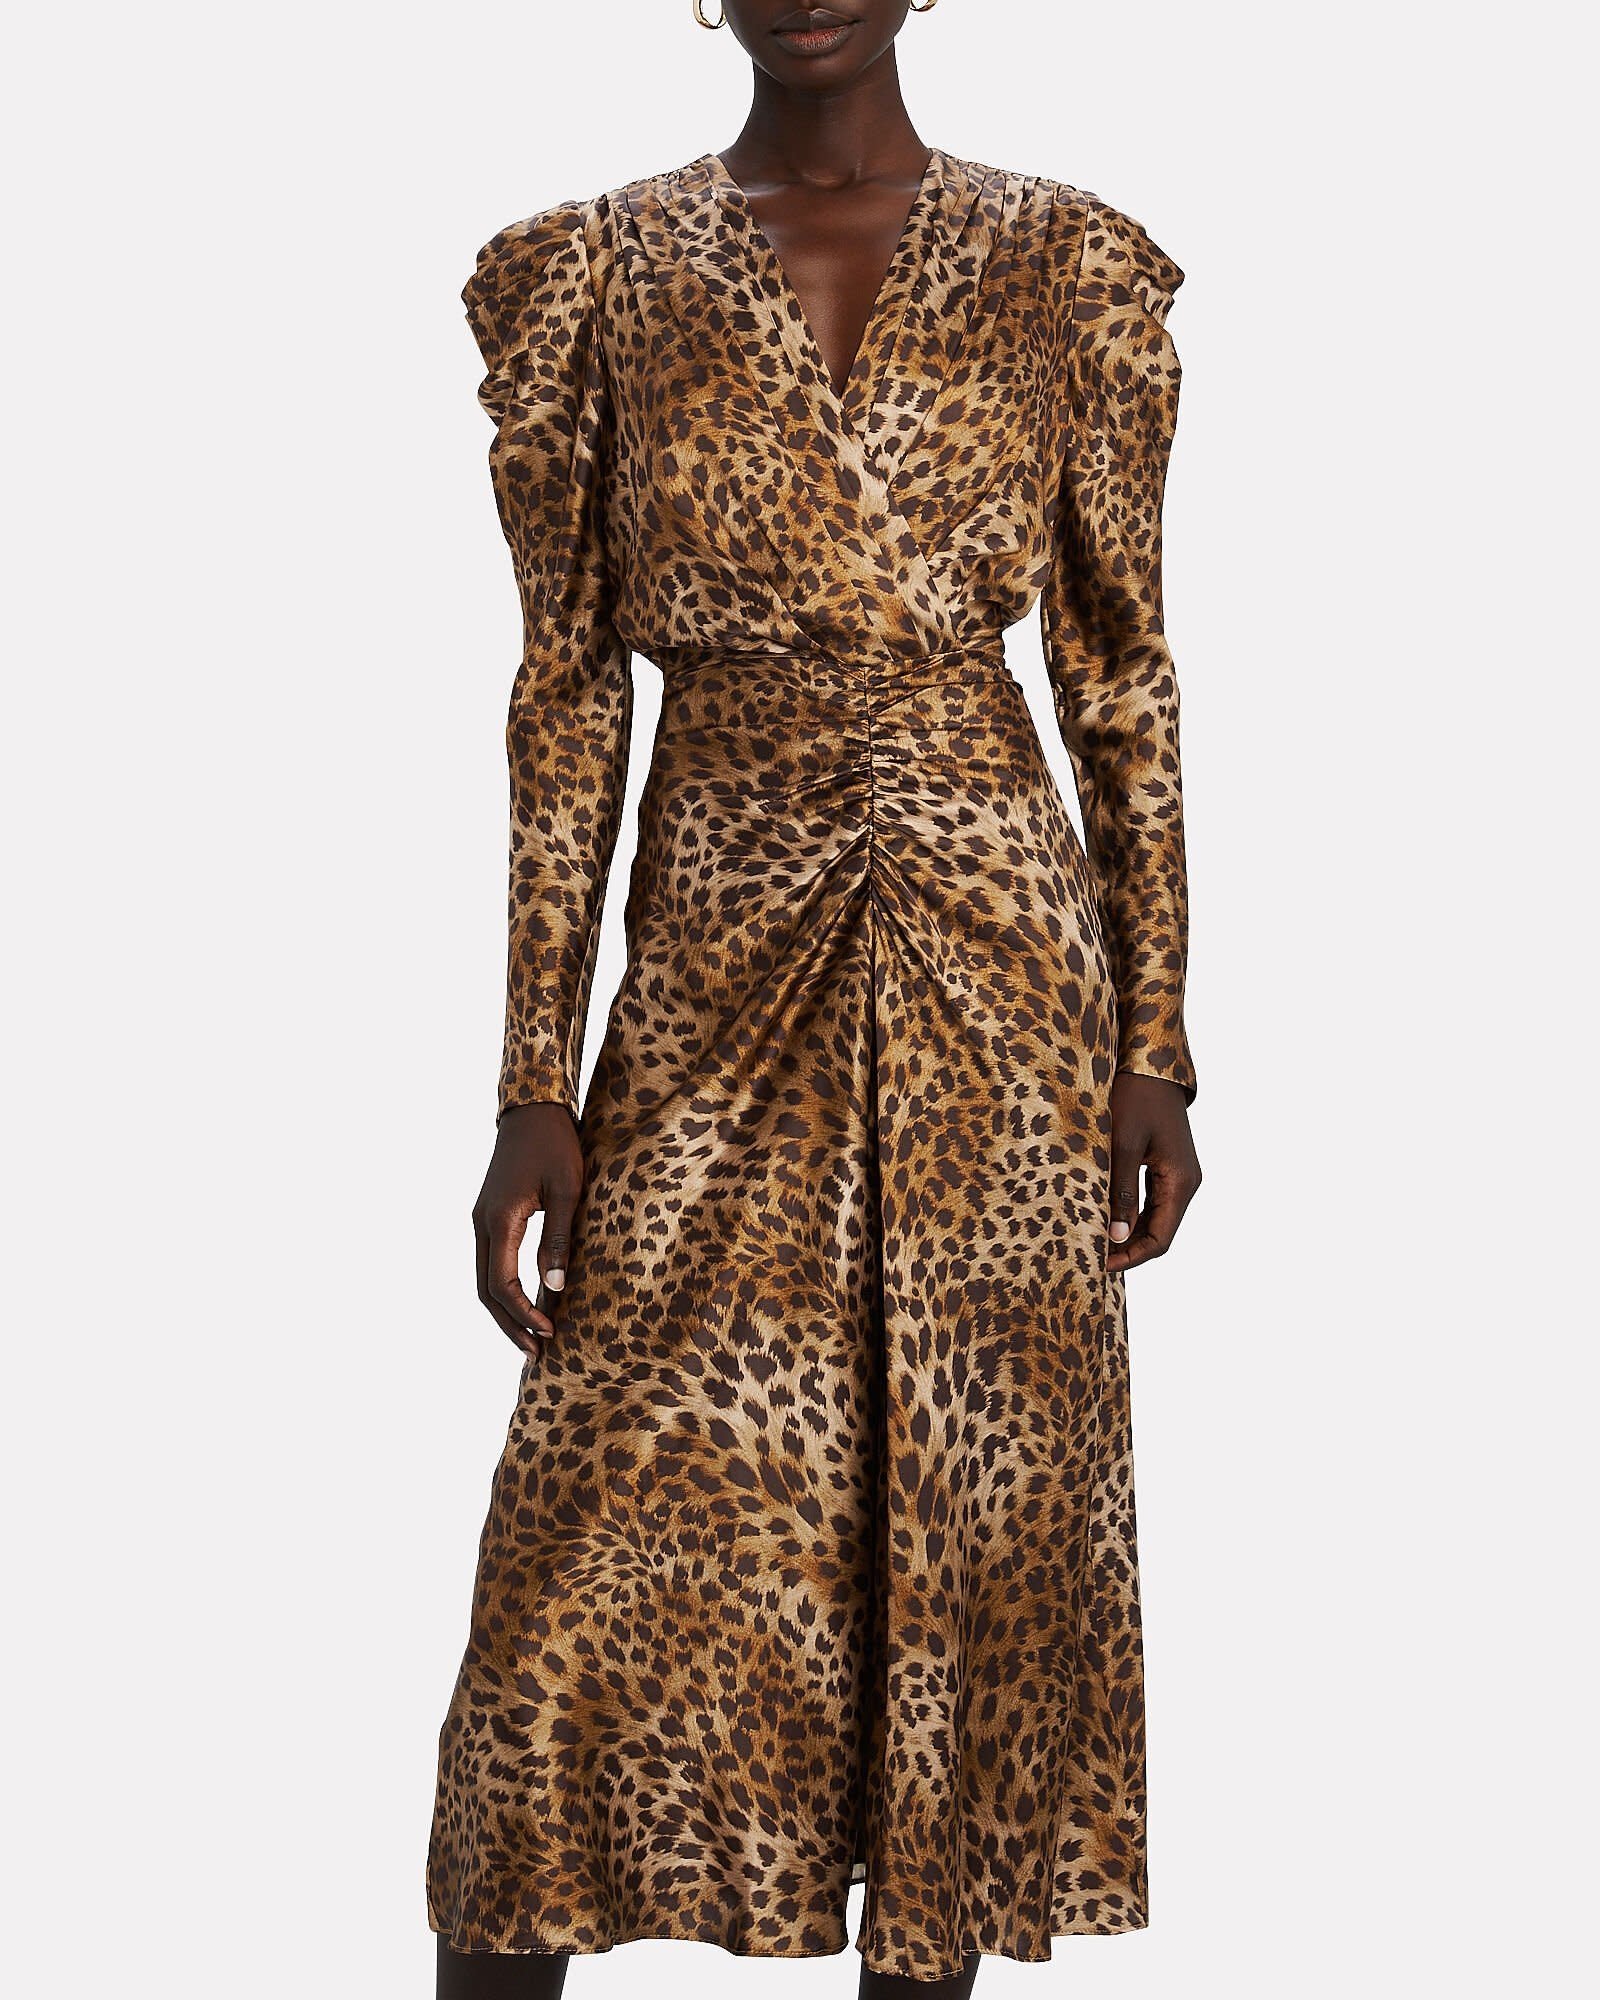 jonathan simkhai leopard dress